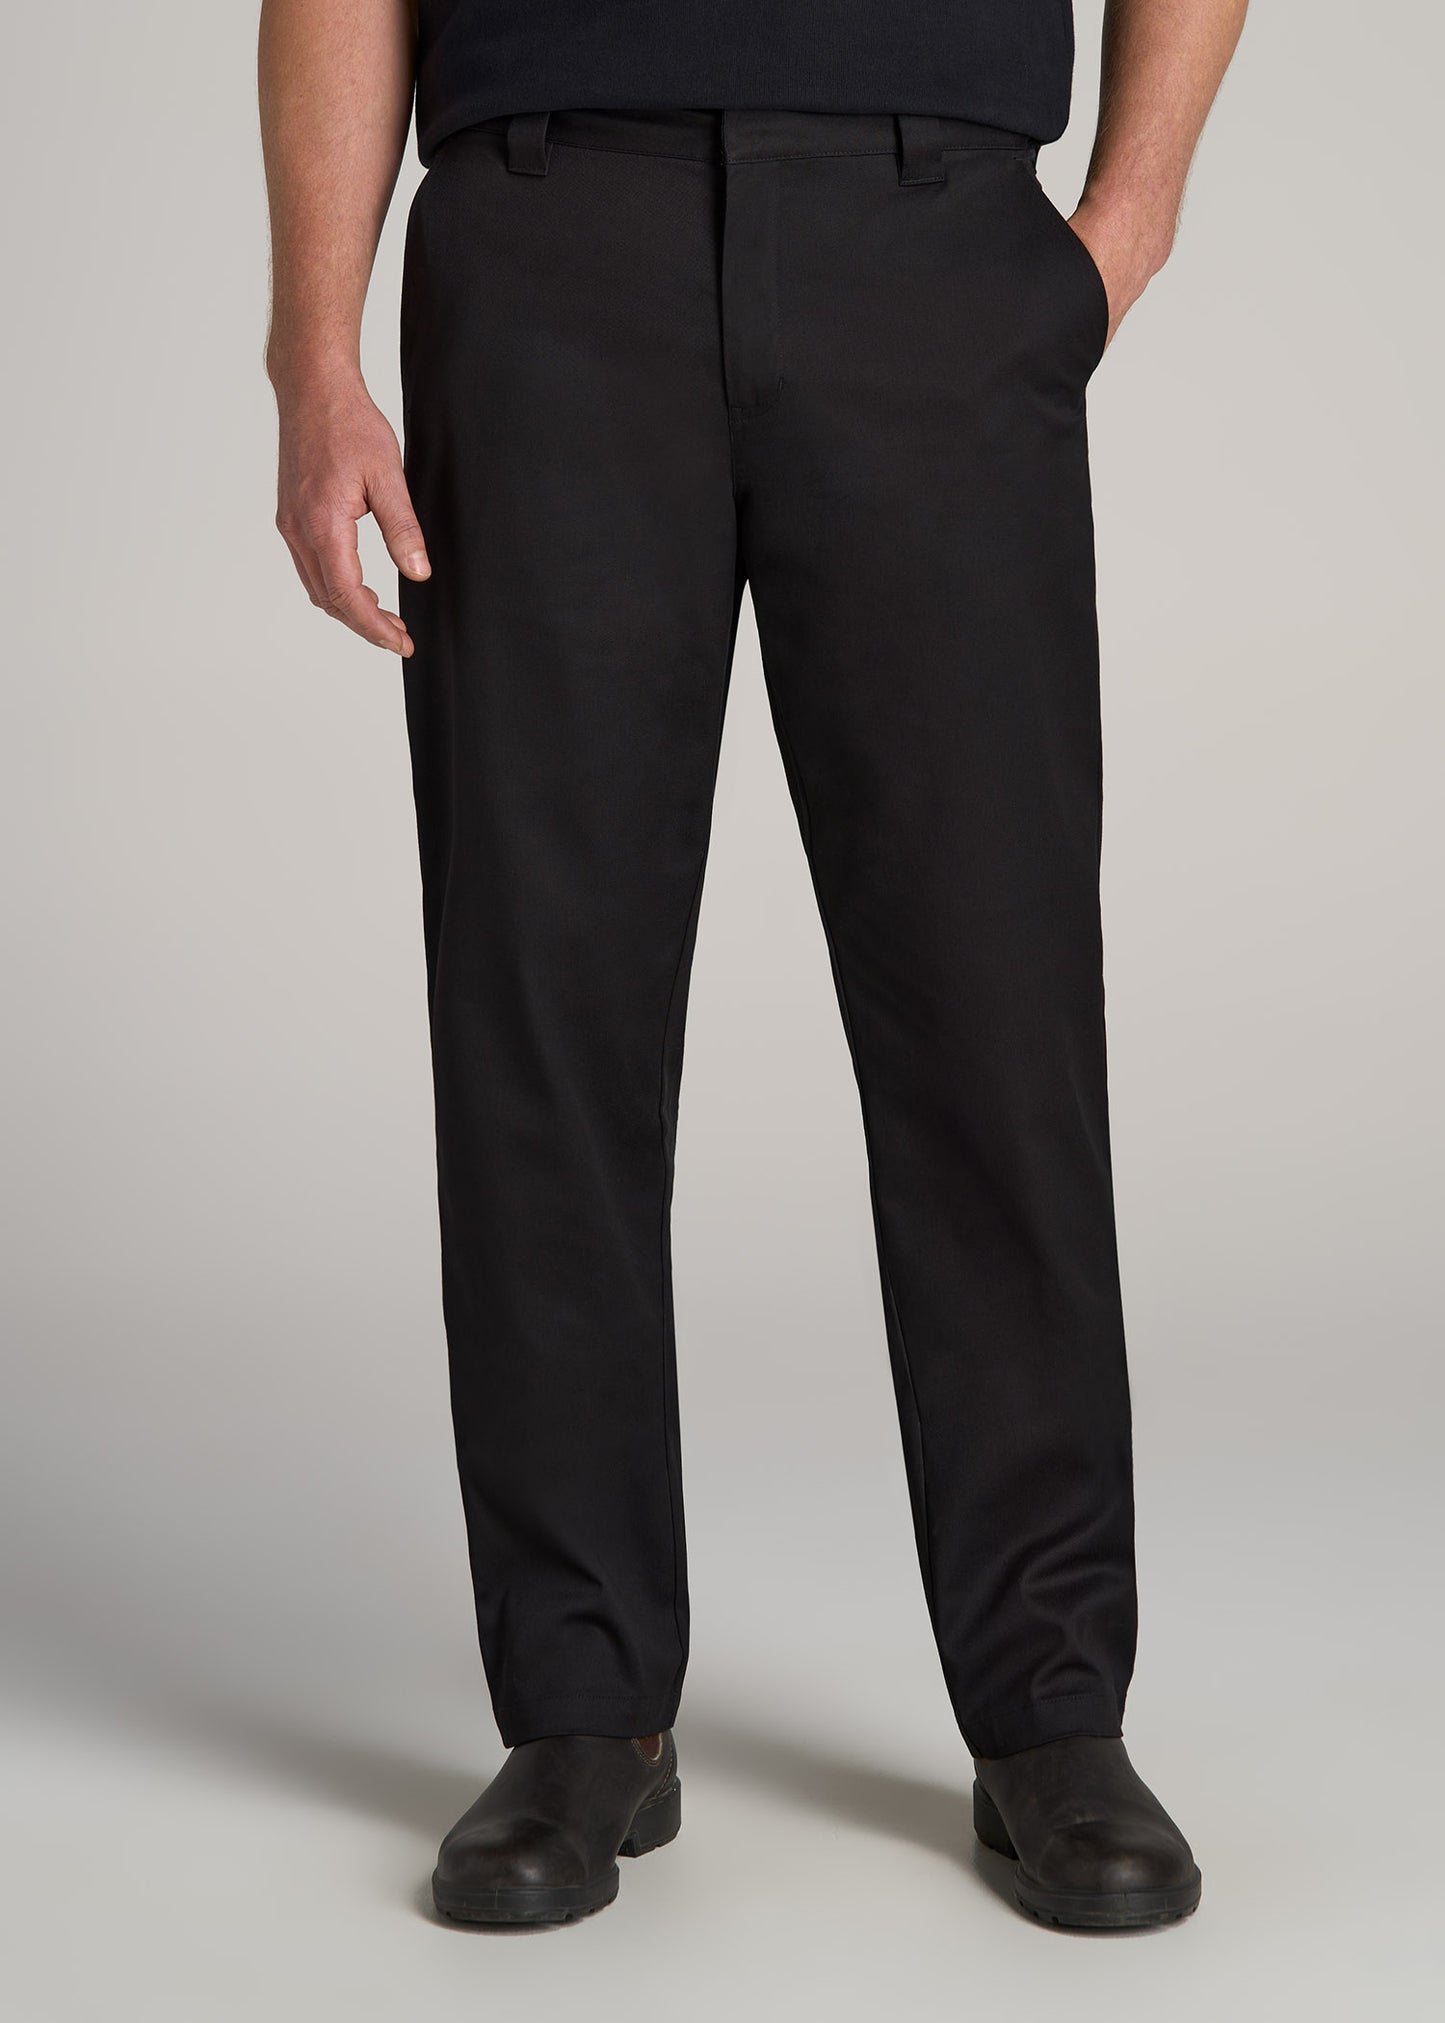 Dickies Men's Black Twill Work Pants (28 X 30) at